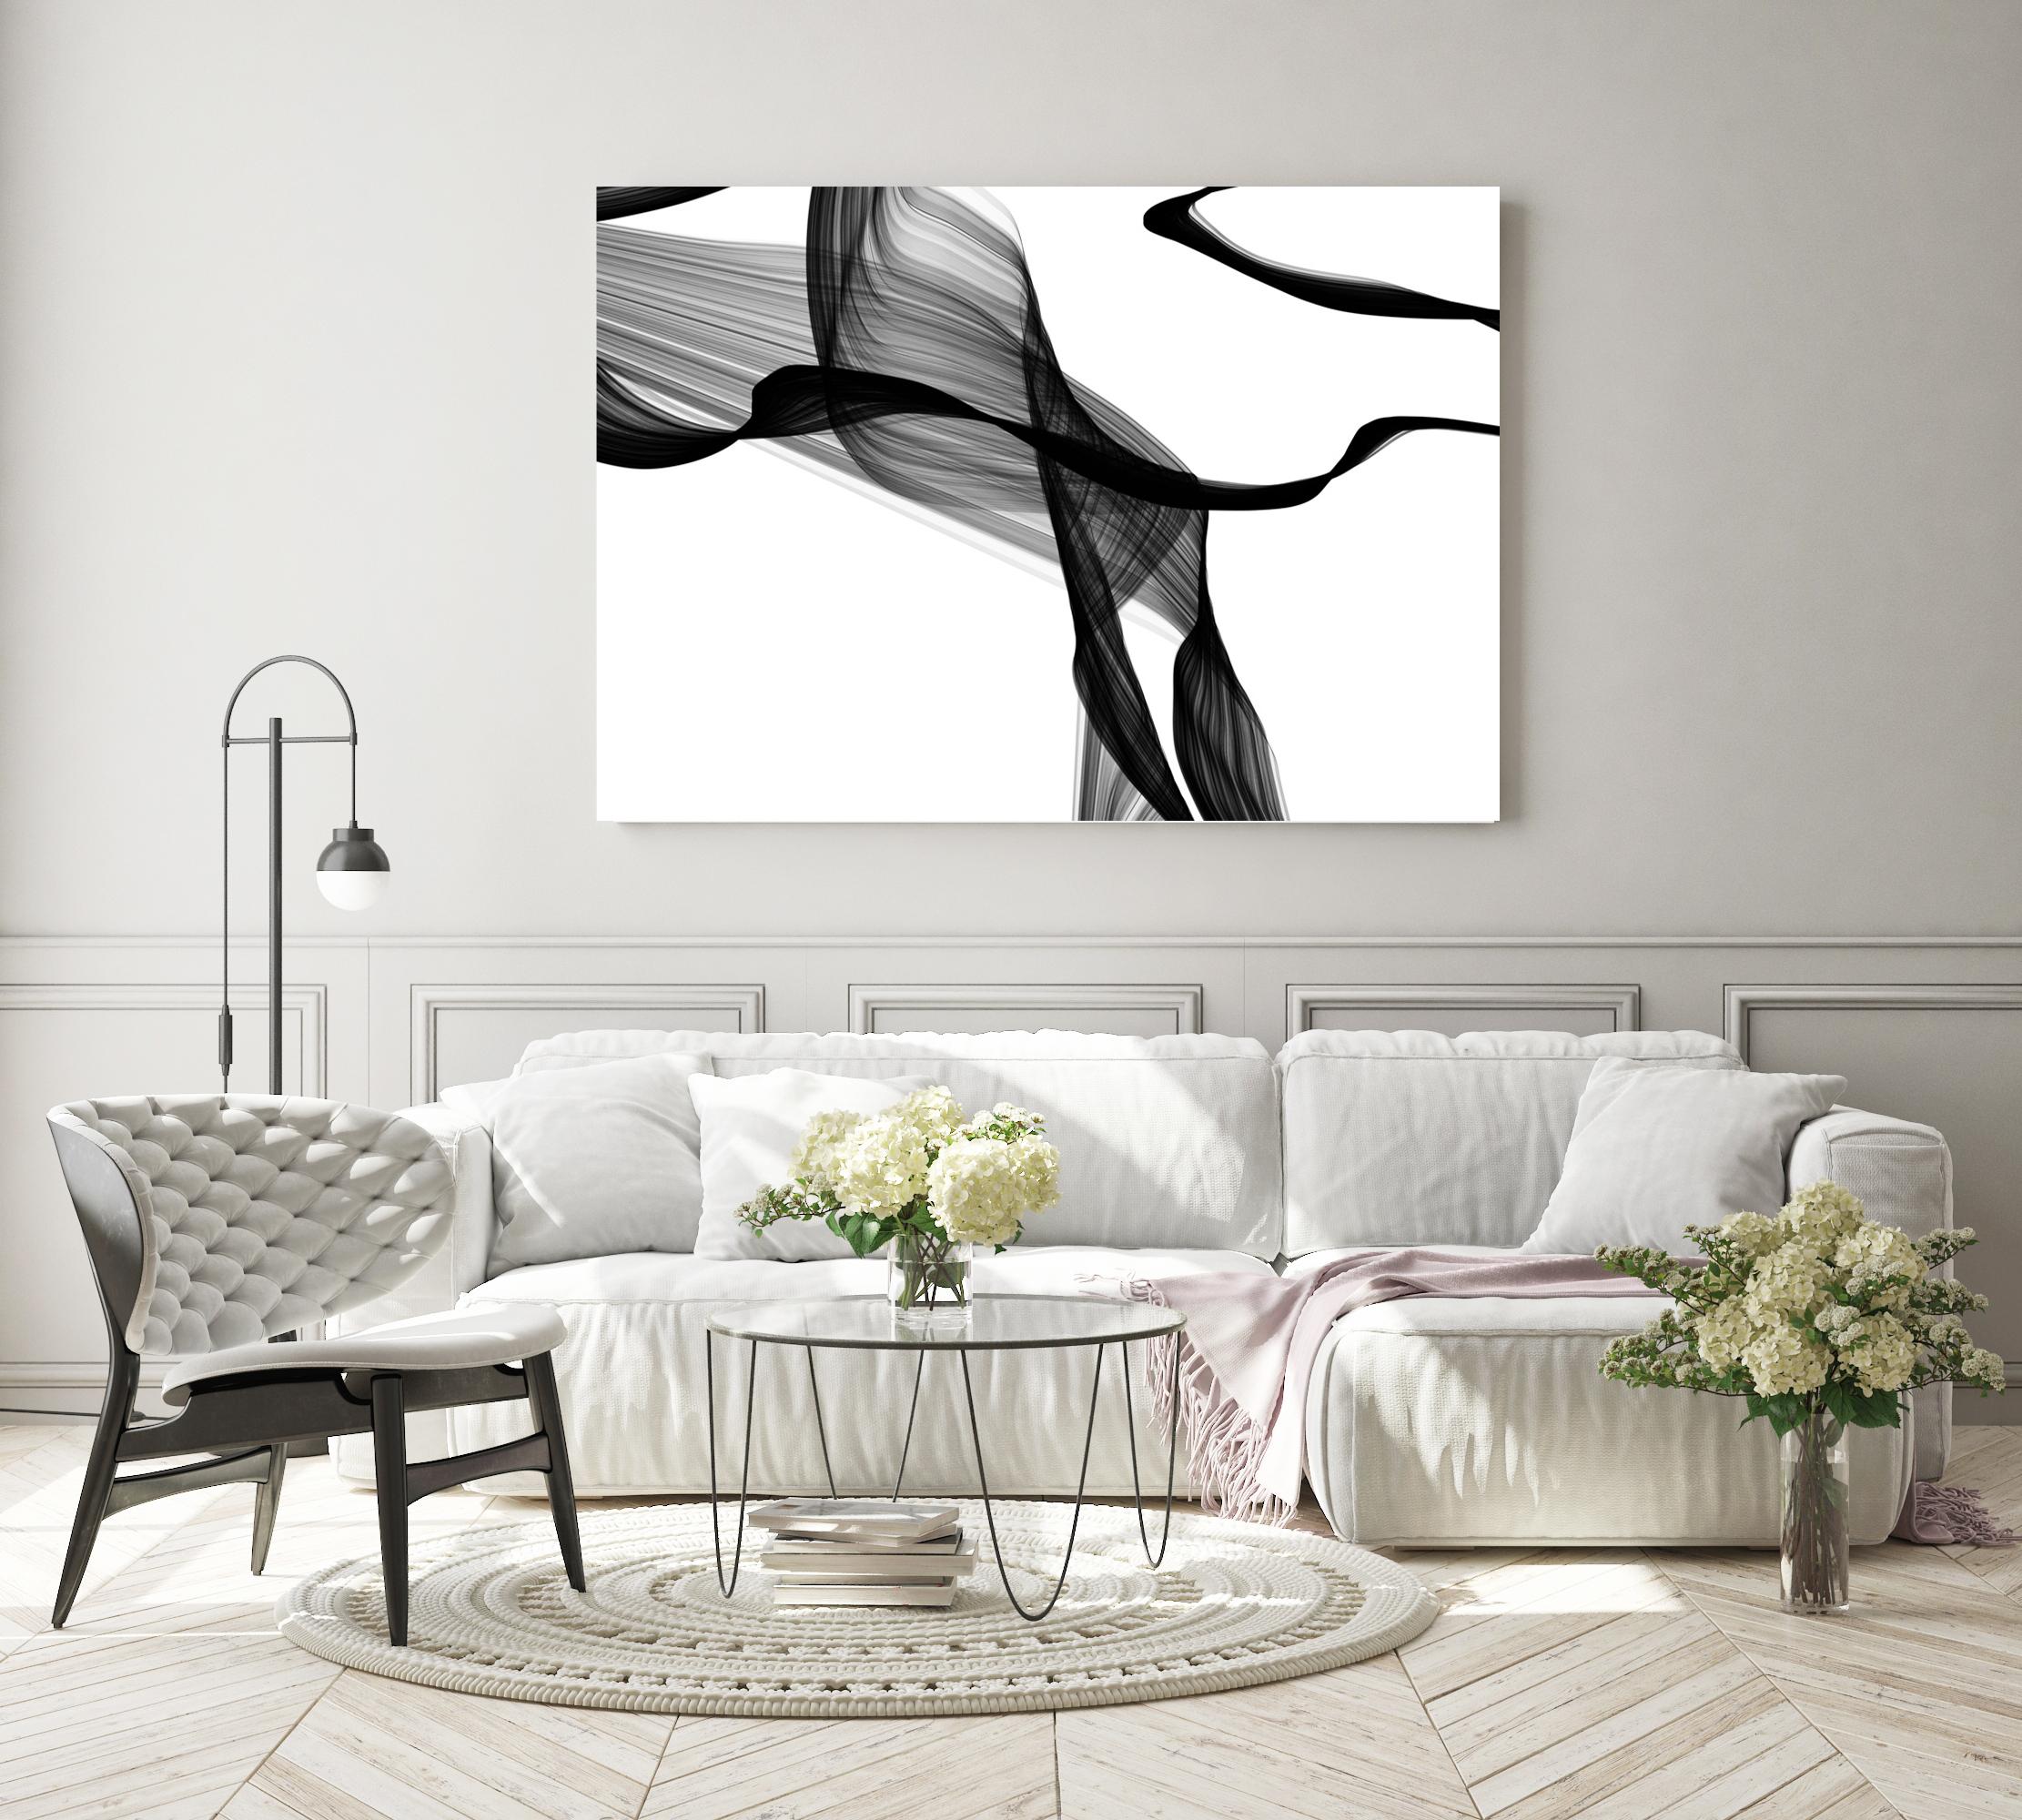 Irena Orlov Interior Painting - Black White Minimalist New Media Painting on Canvas 60x45" Deep Dream